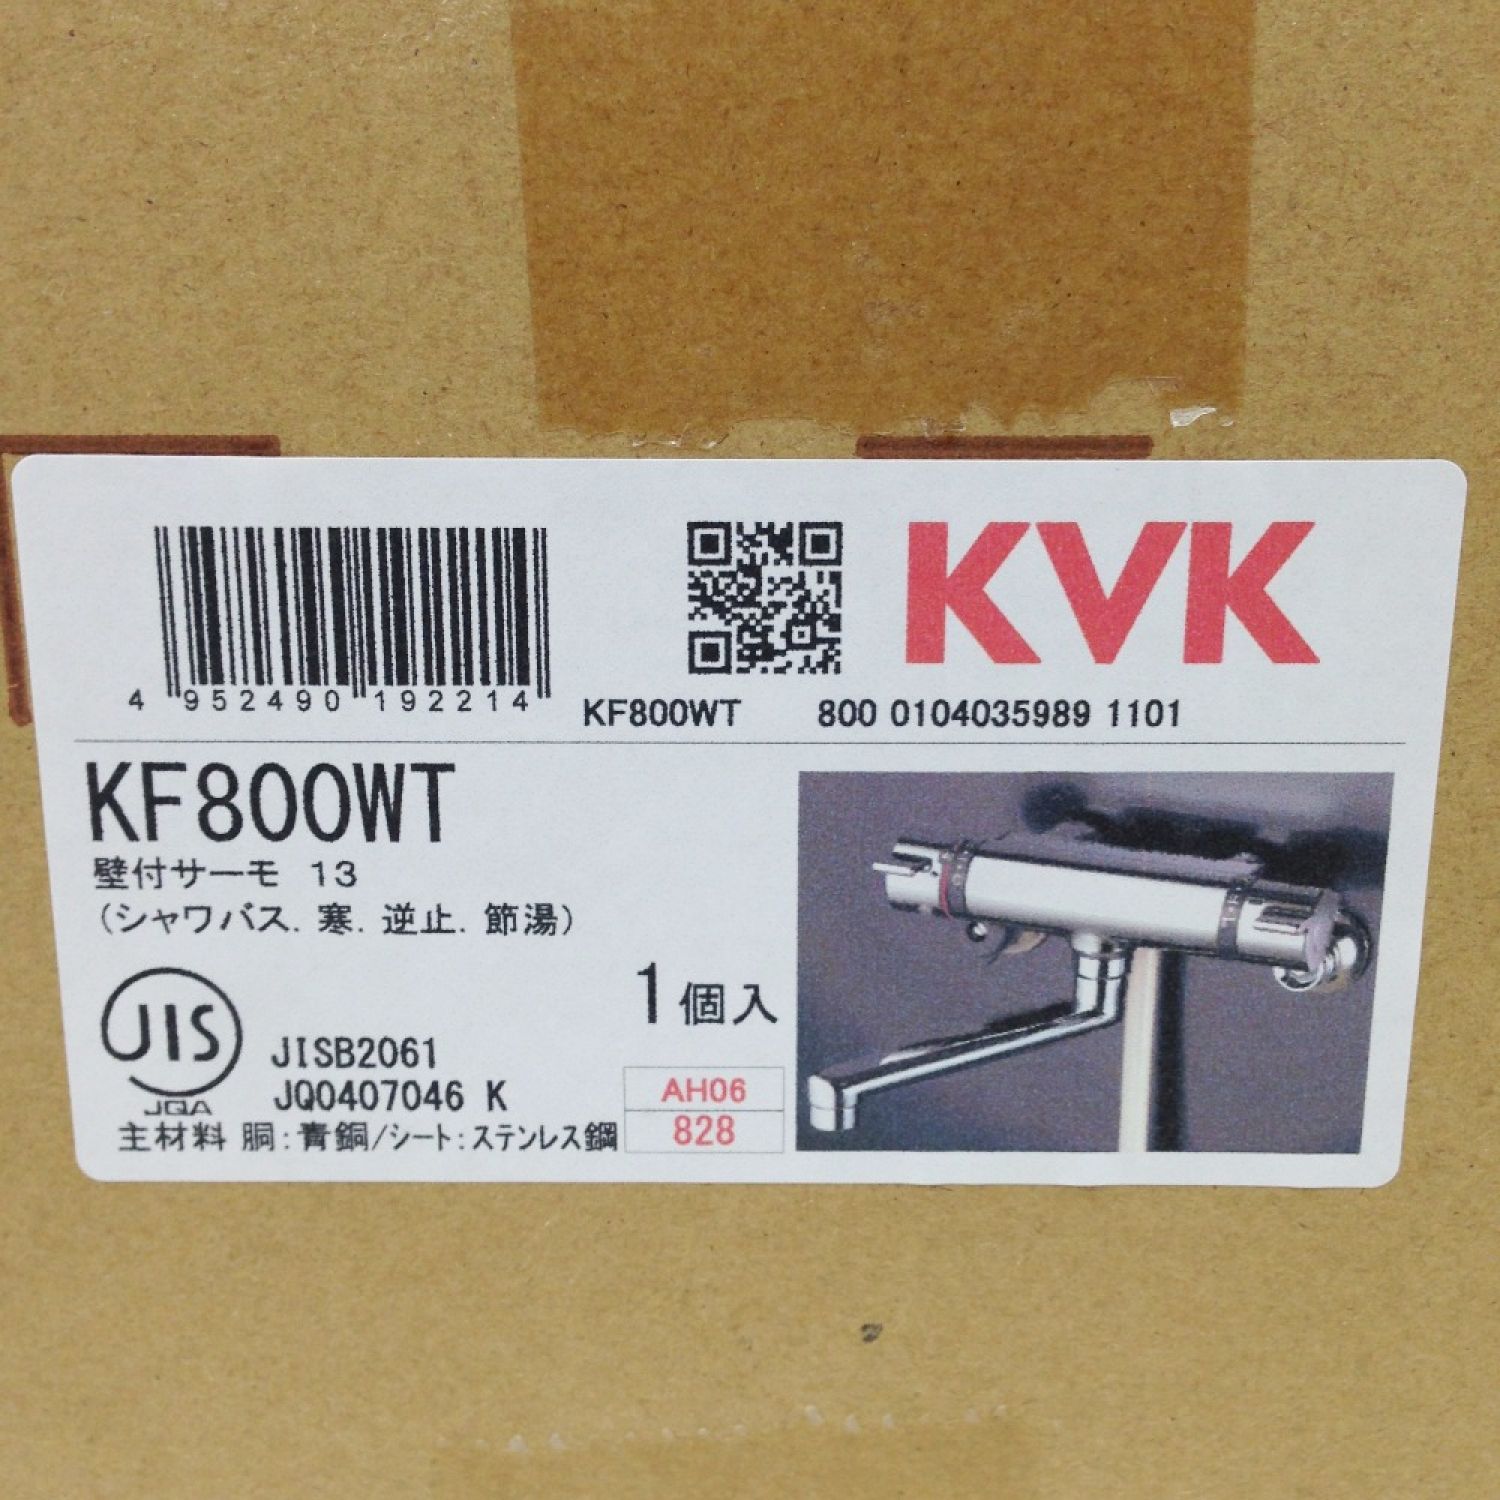 KVK サーモスタットシャワー KF800WT 適当な価格